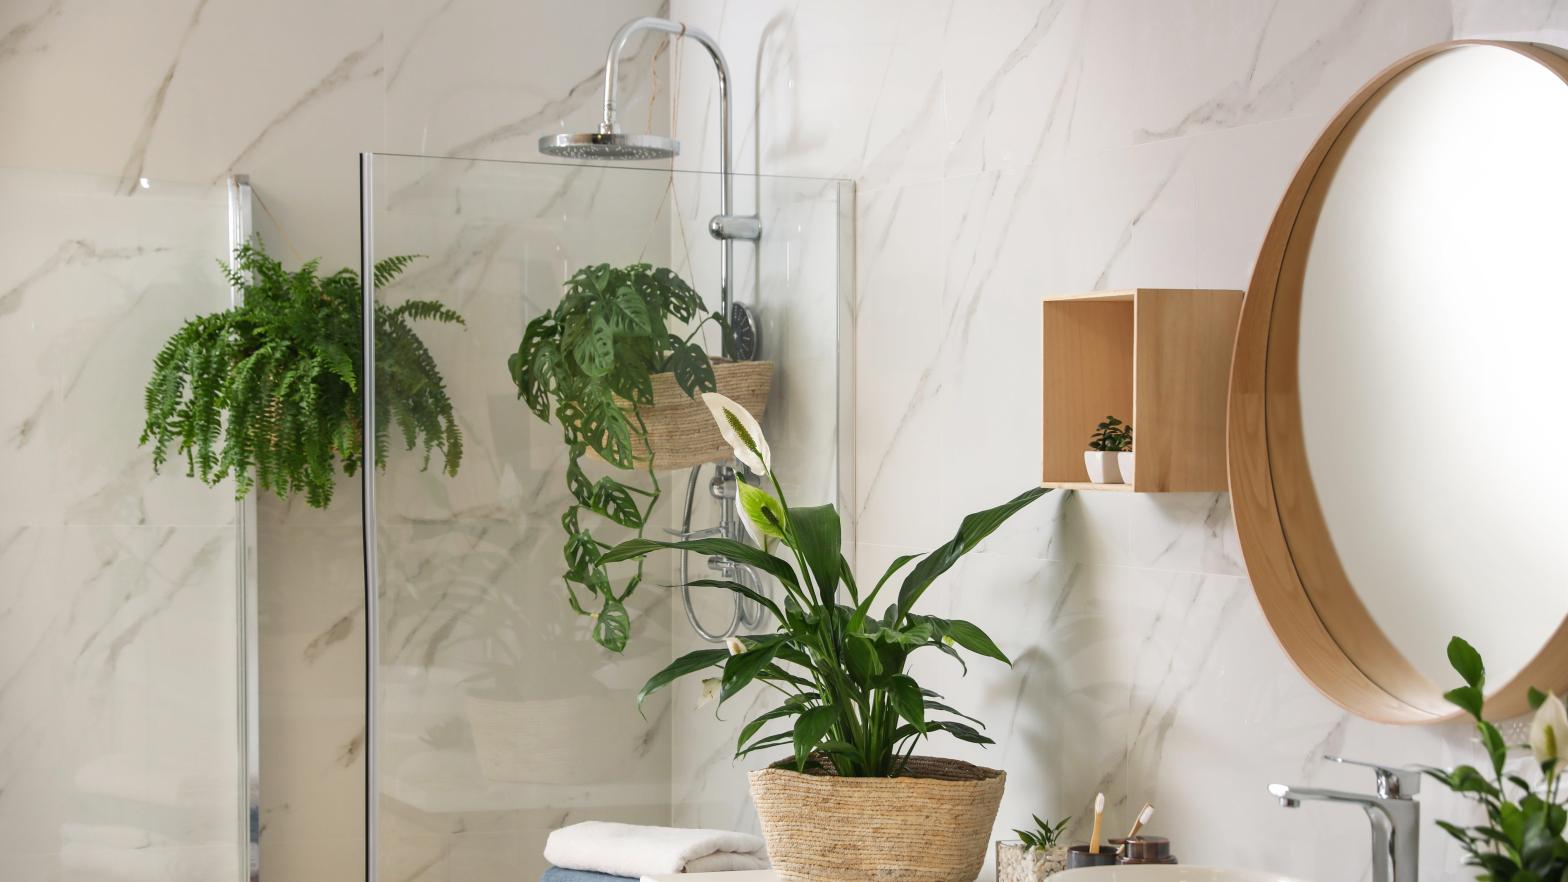 plants in shower Photo: New Africa, Shutterstock